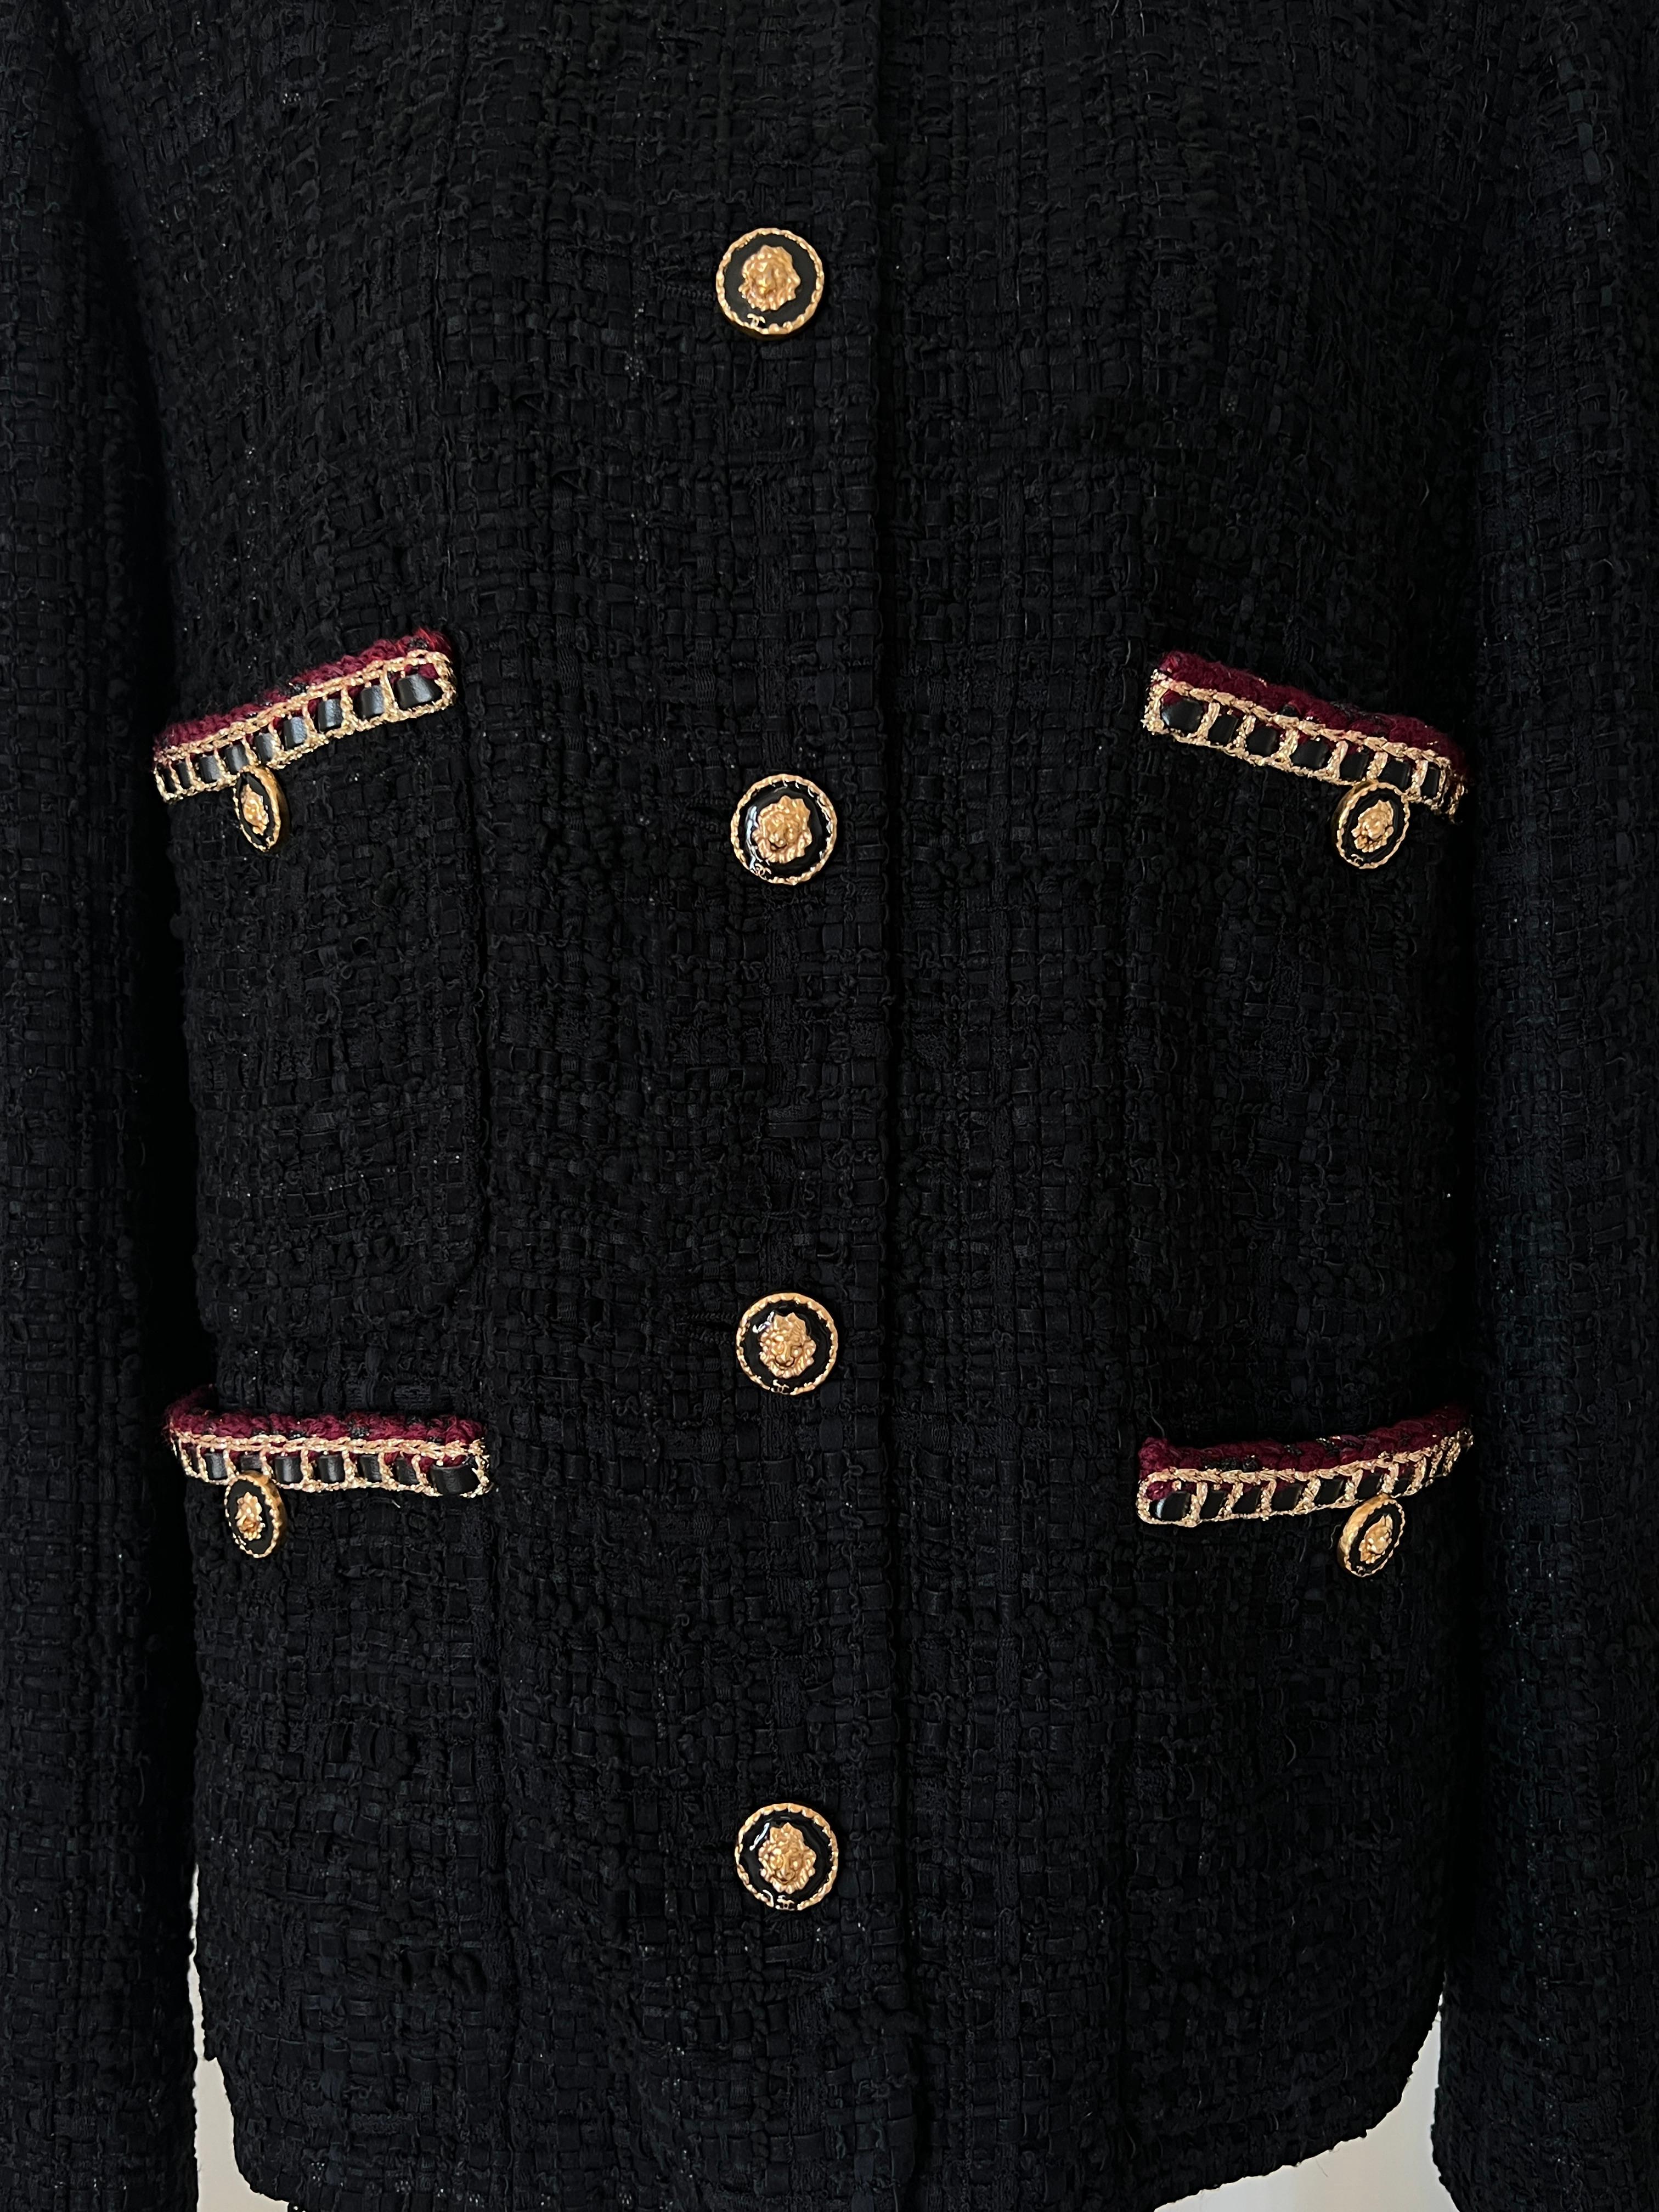 Chanel Hailey Bieber Style Chain Trim Black Tweed Jacket 12